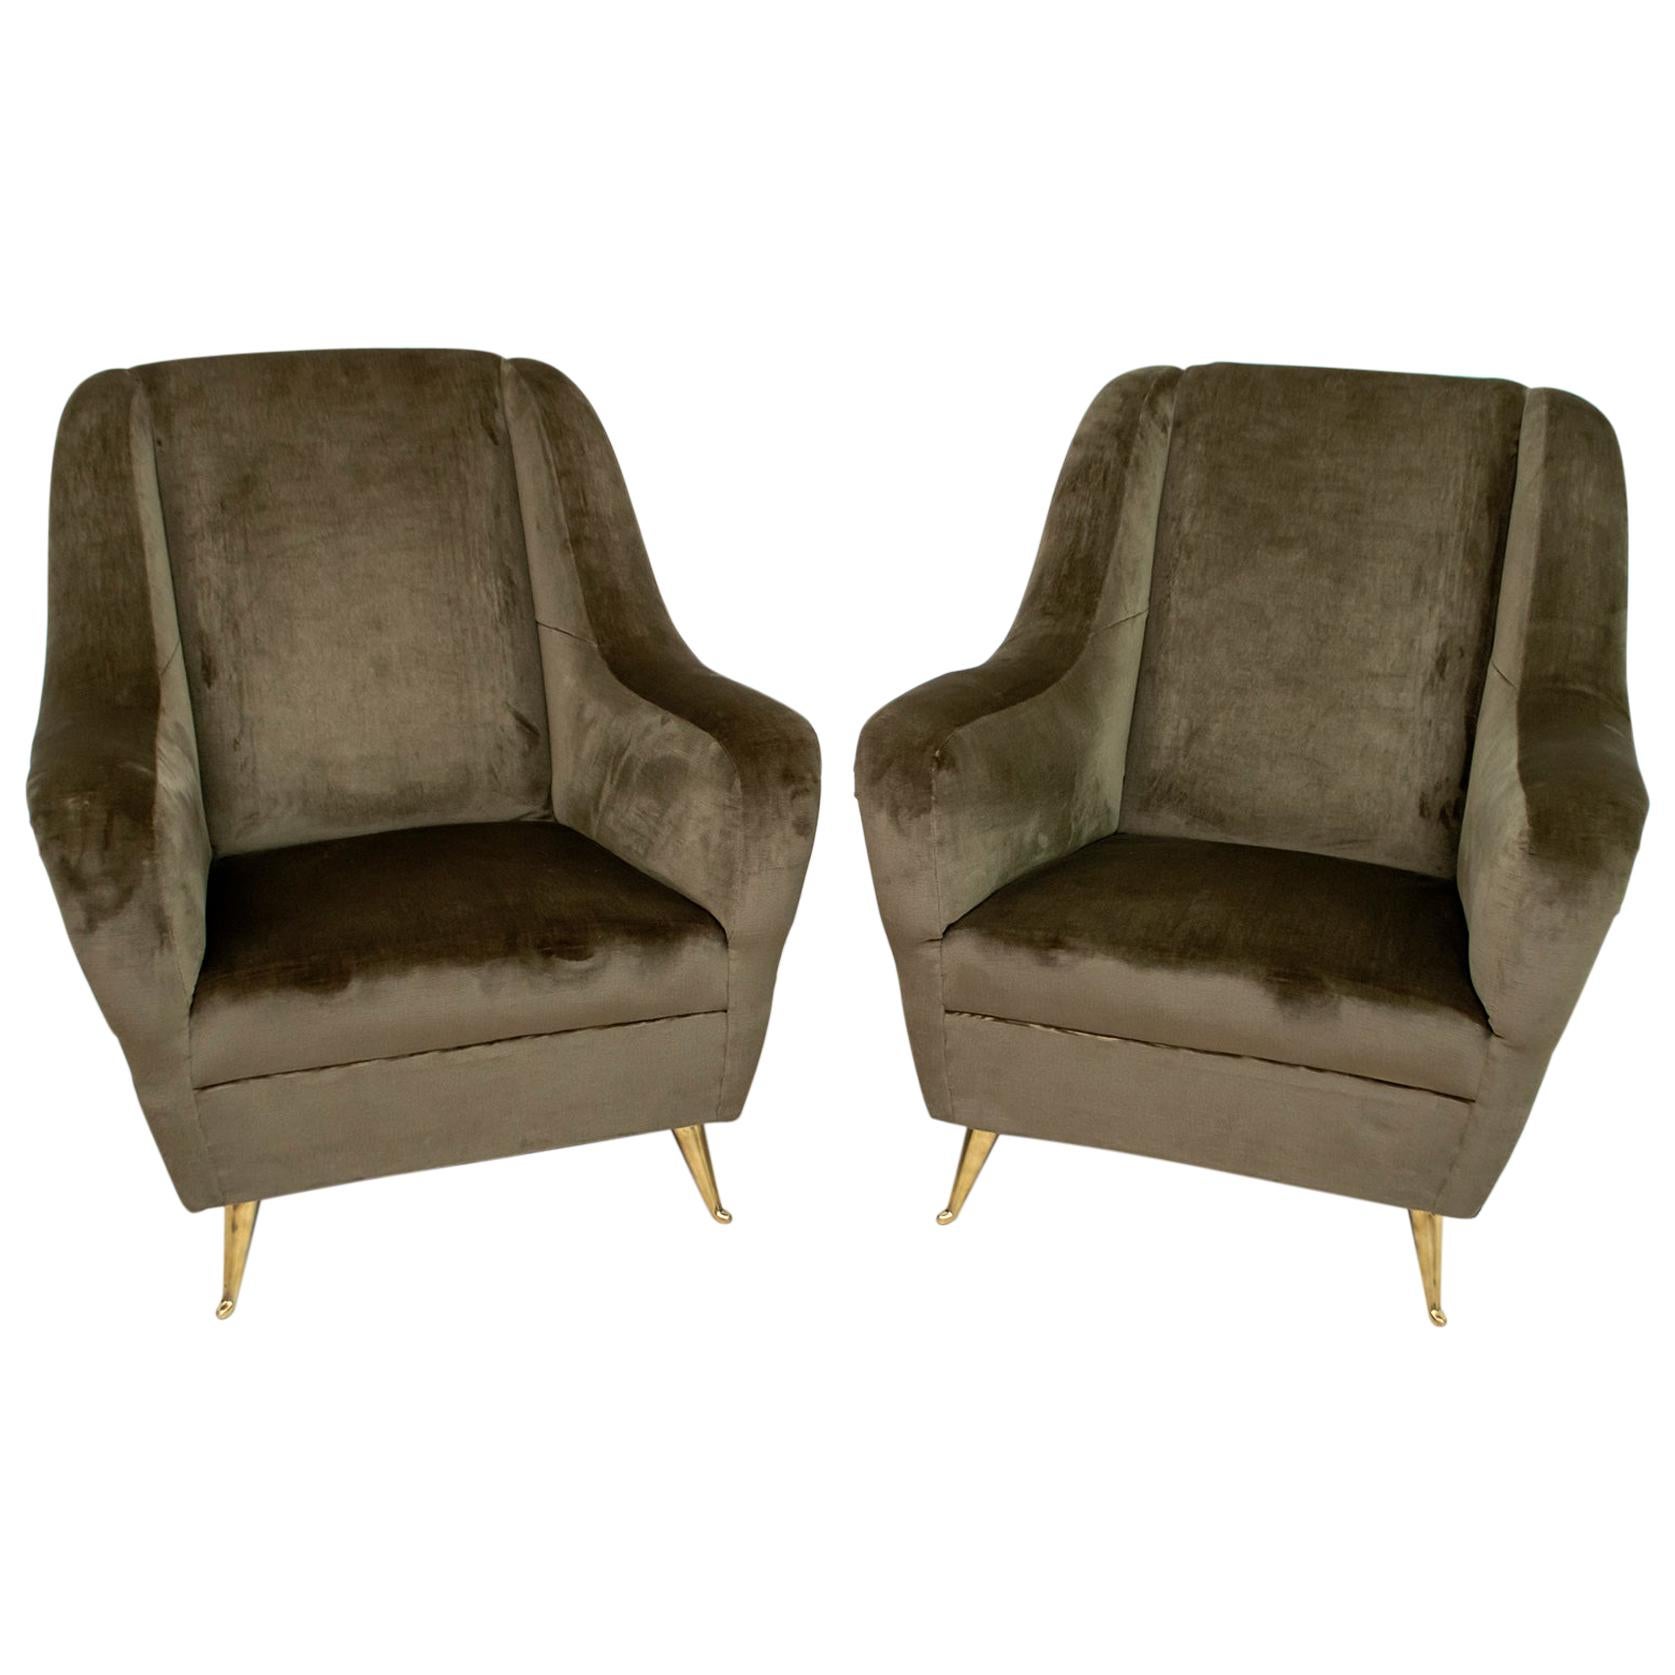 Pair of Gio Ponti Mid-Century Modern Italian Velvet Armchairs for ISA, 1950s